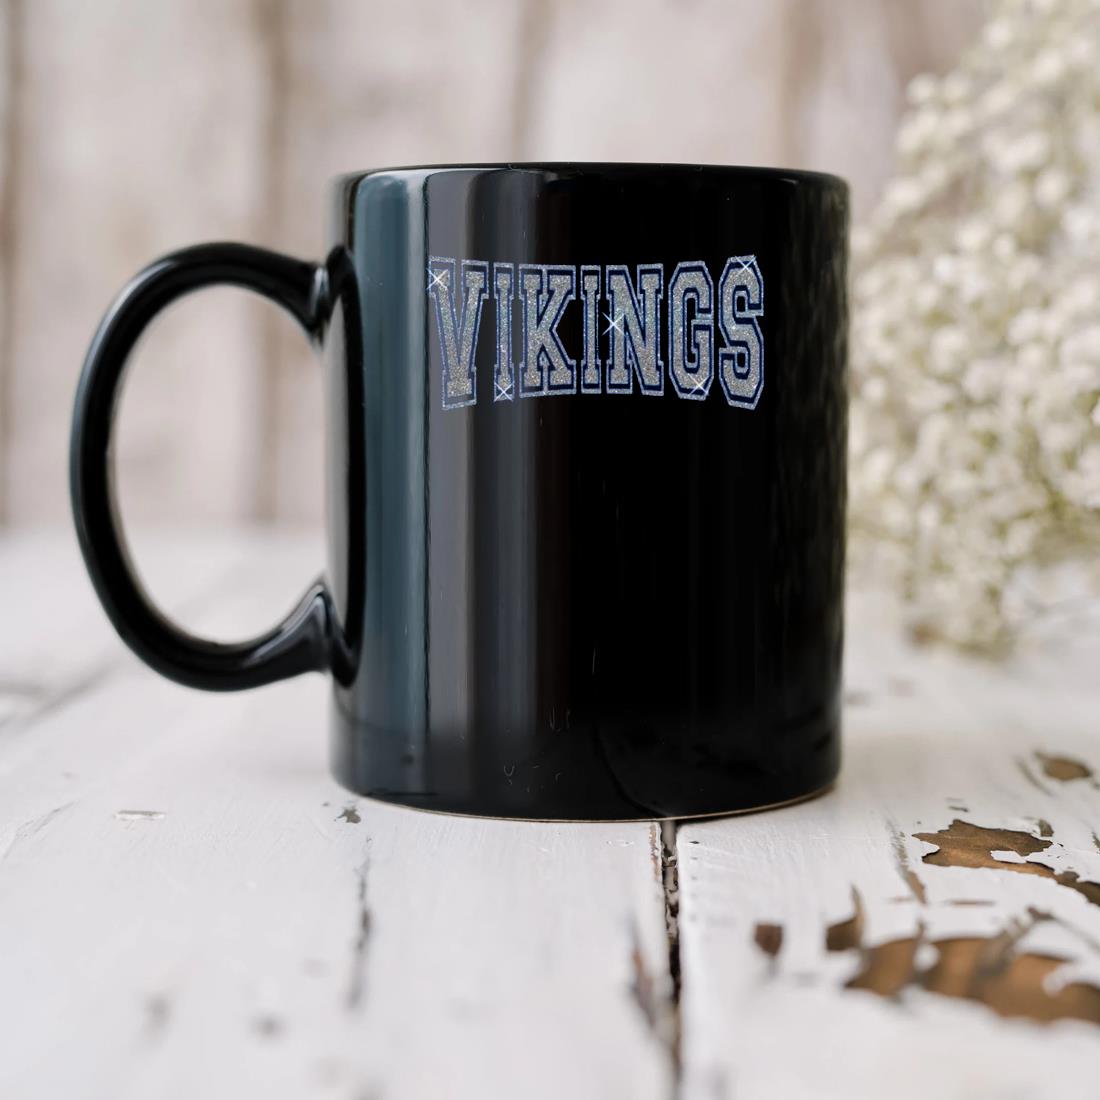 Vikings Vintage Mug biu